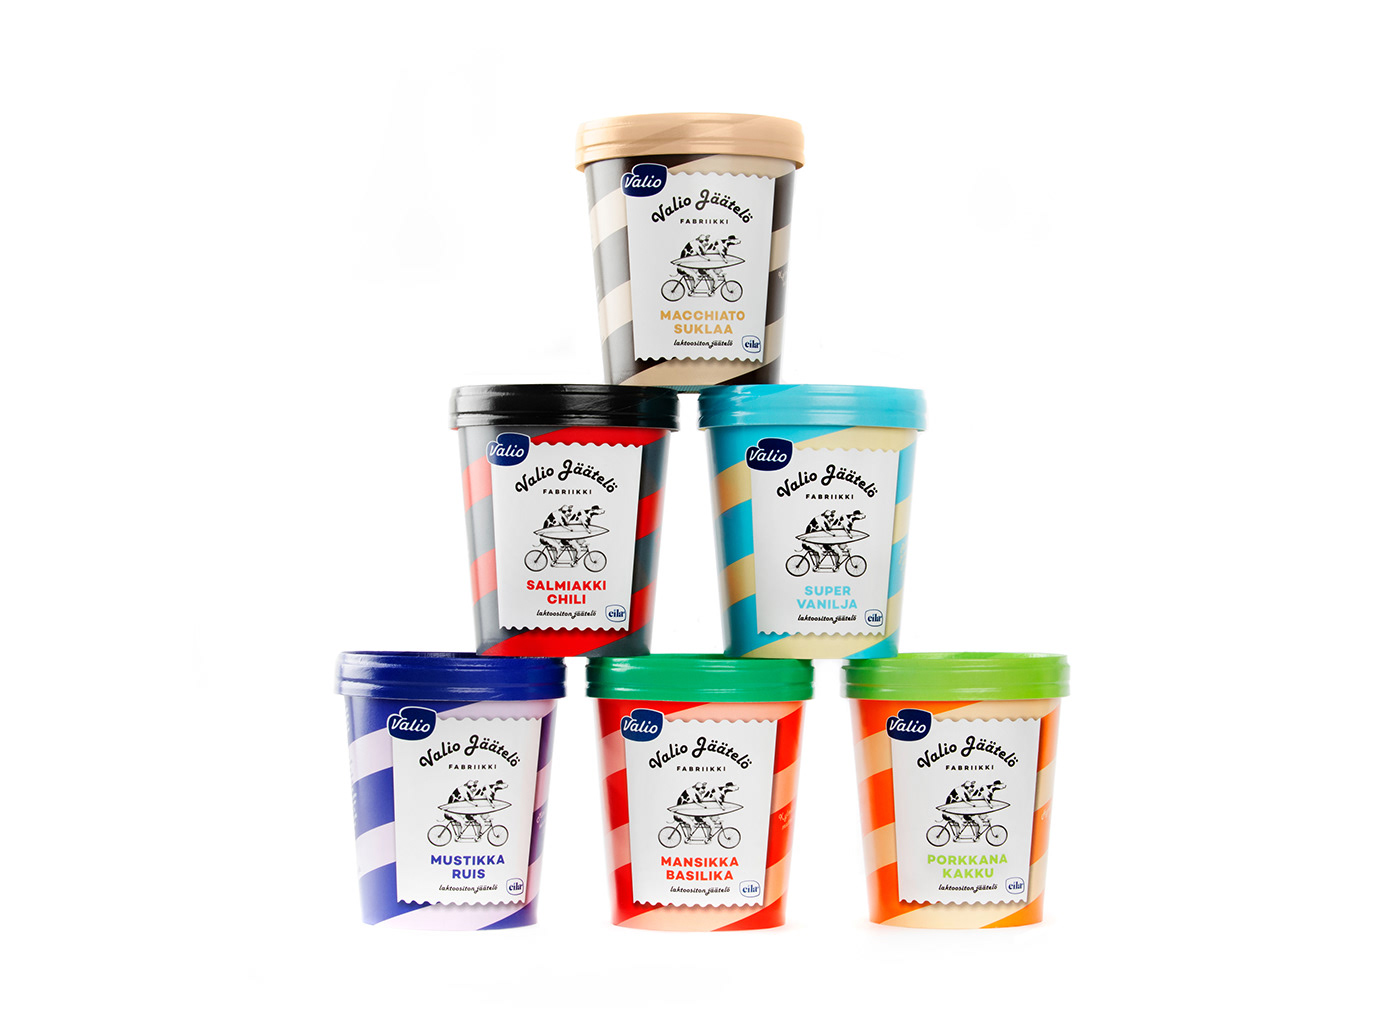 branding  package ice cream stripes Colourful  Fun graphic design  blueberry rye valio